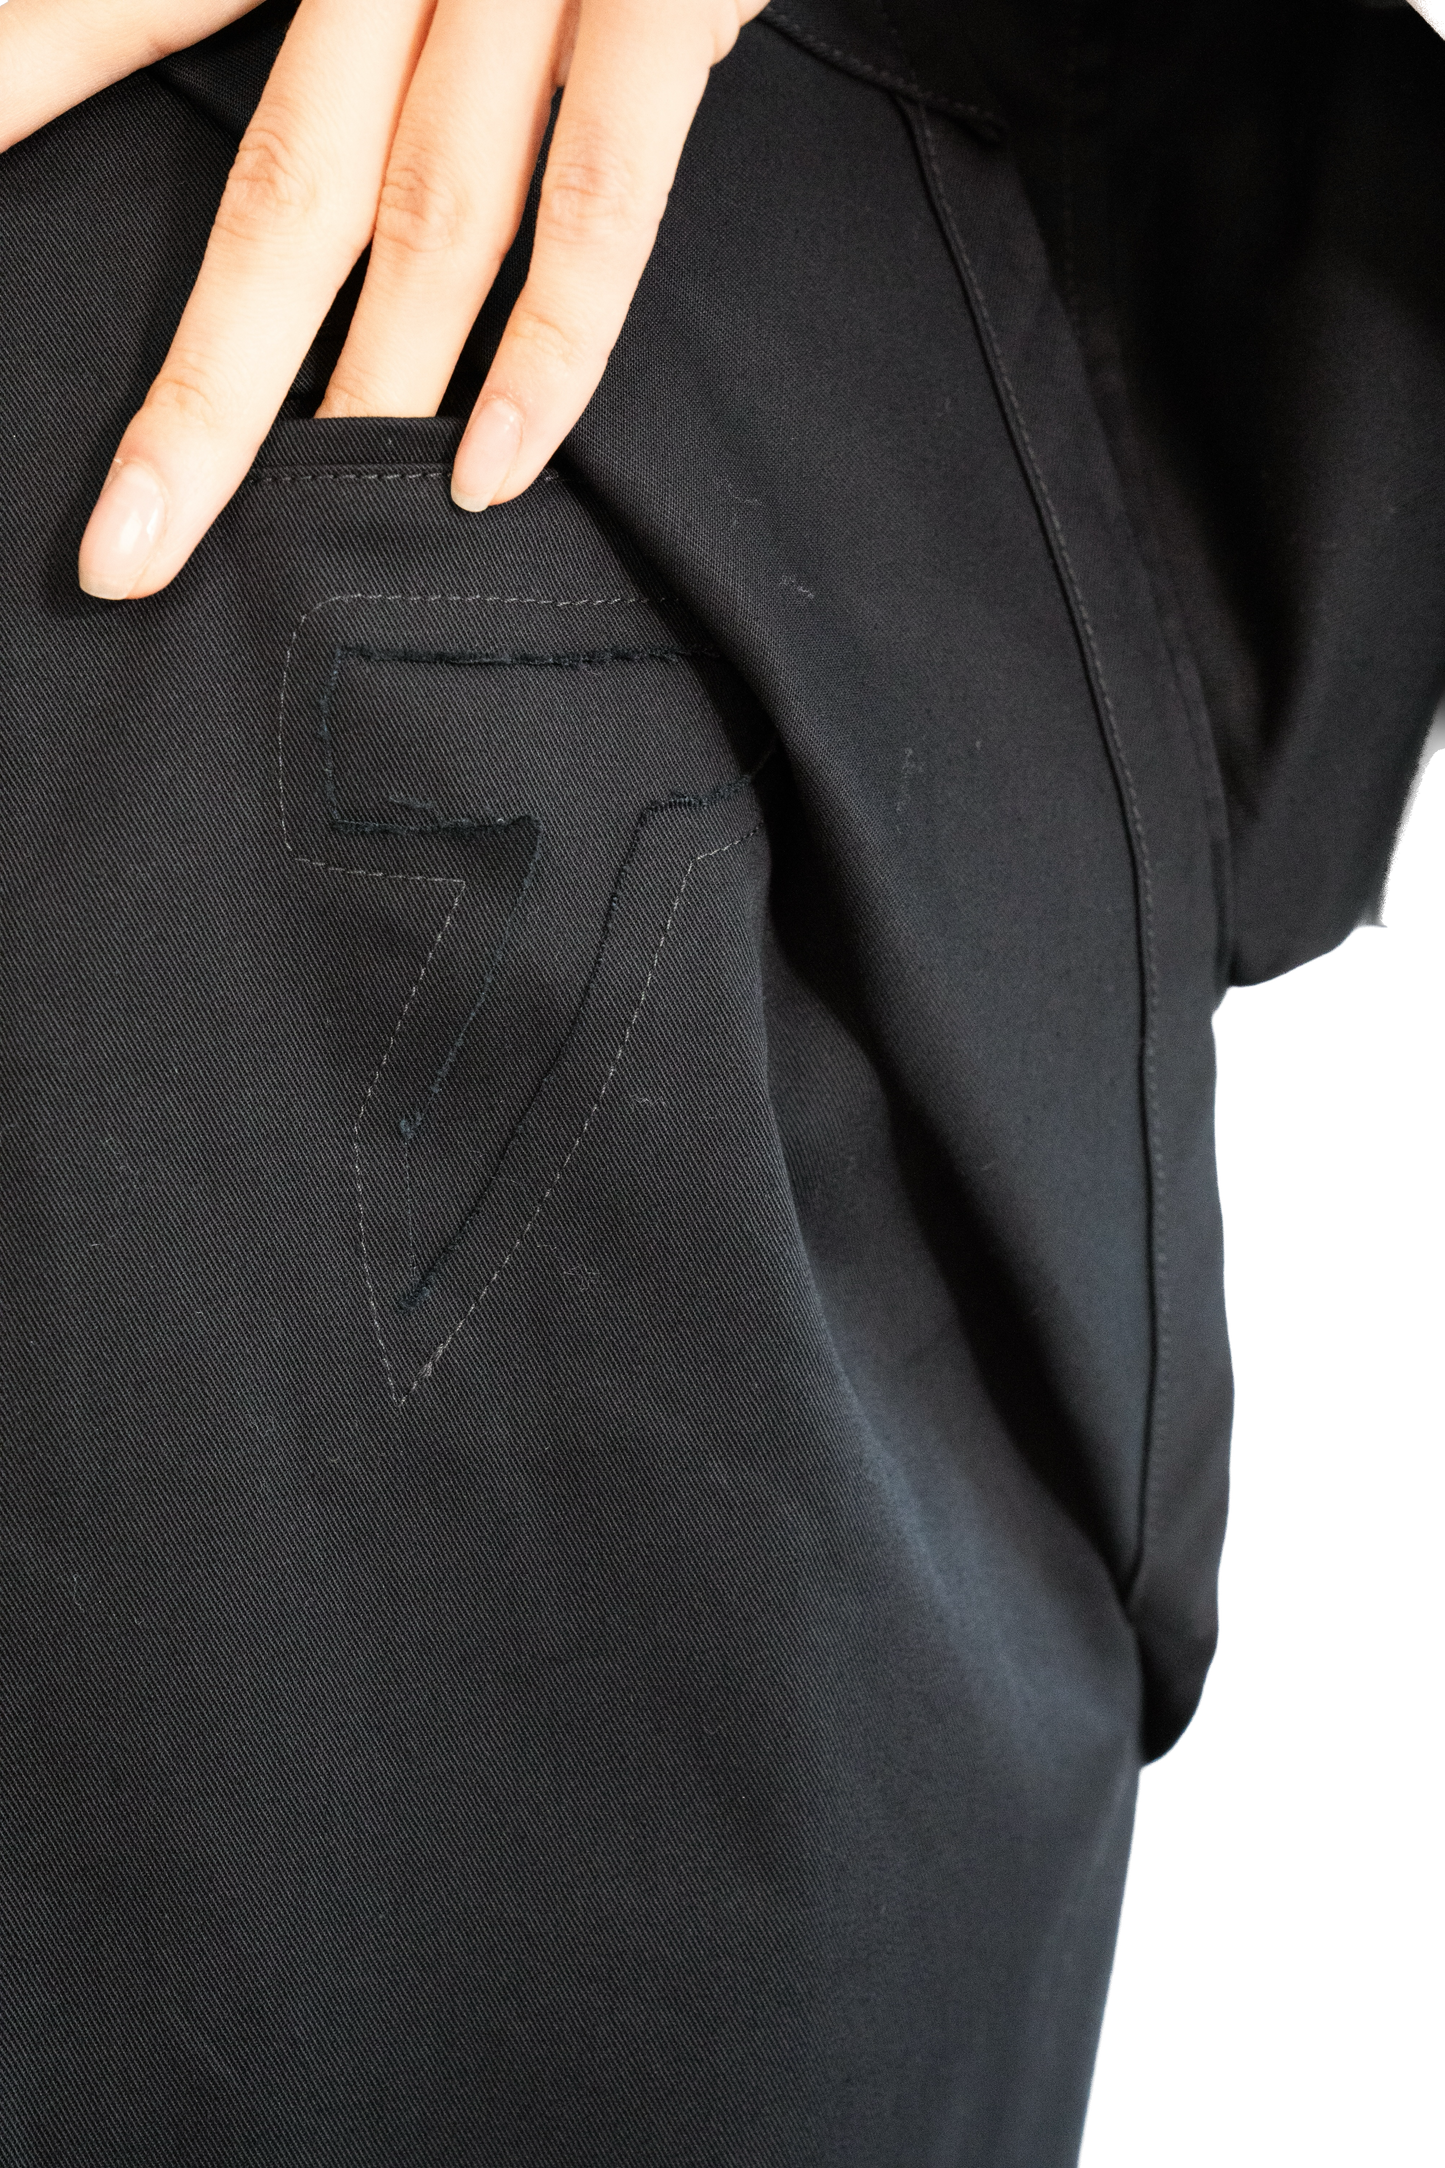 Folding Shirt - Black